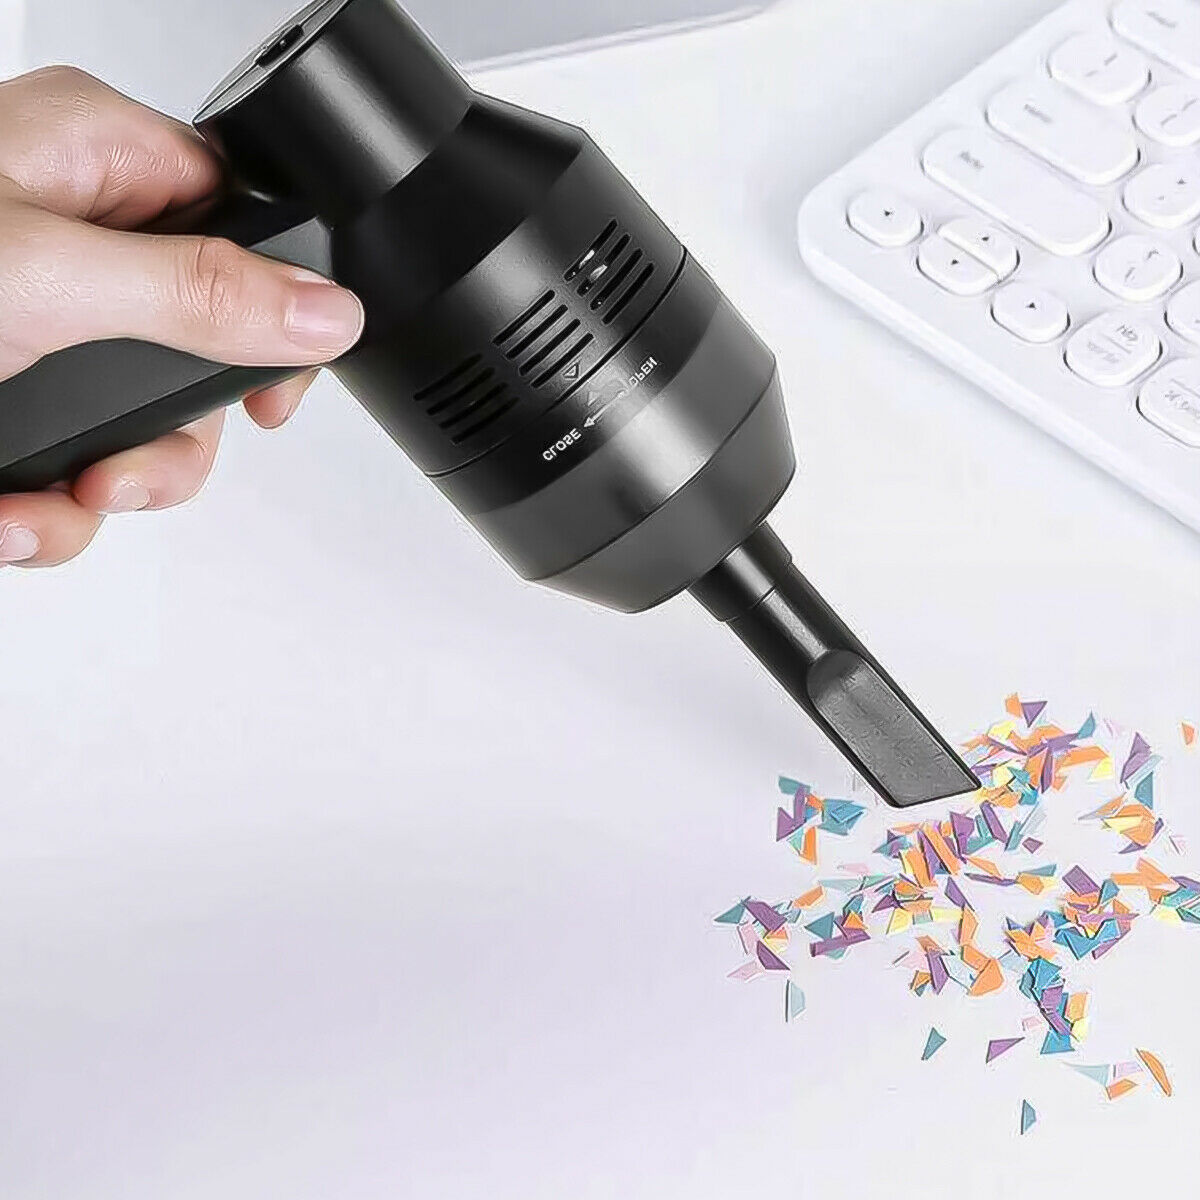 USB Keyboard Vacuum Cleaner Cordless